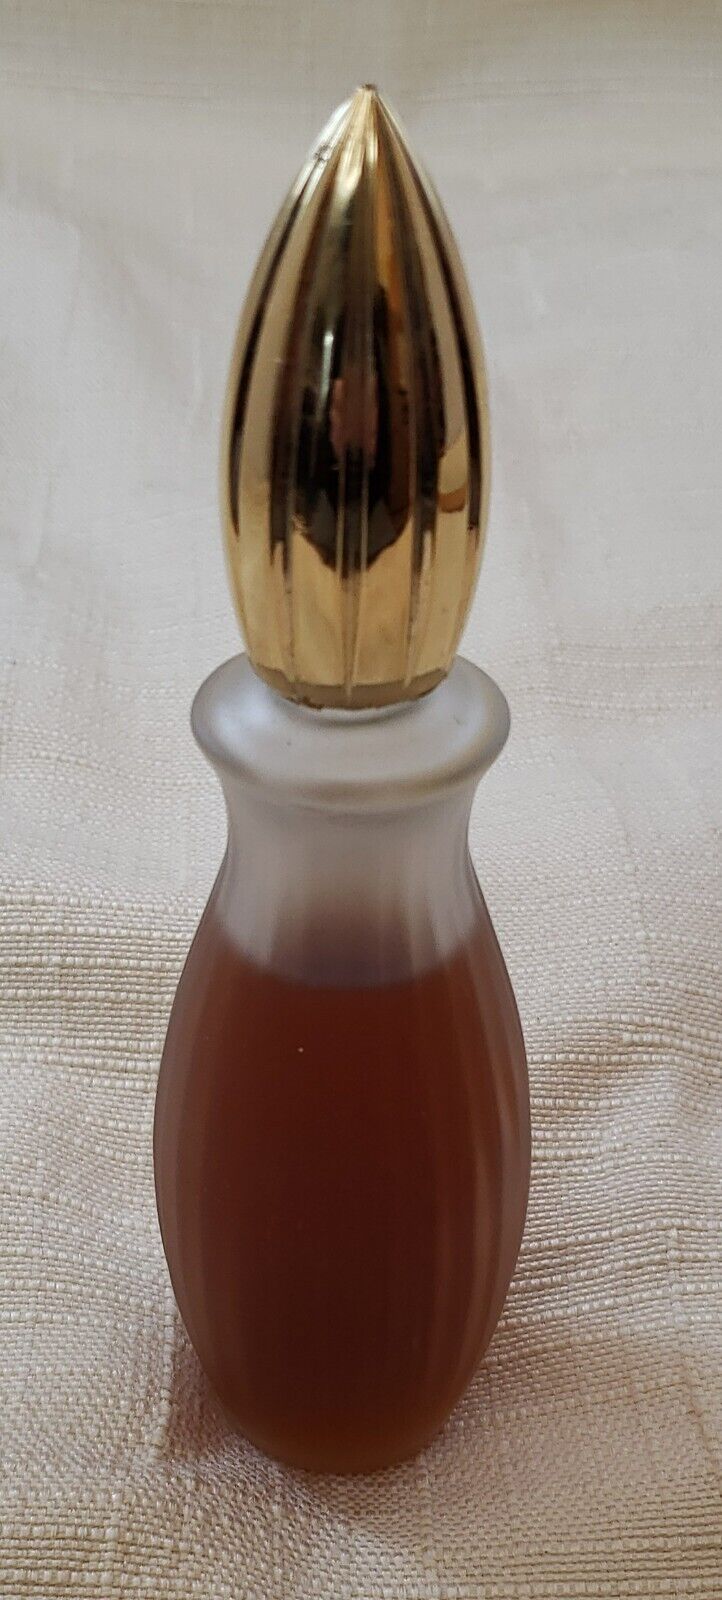 RARE Vintage Revlon's EPAS Concentrated Cologne Frosted Bottle Gold Tone Cap